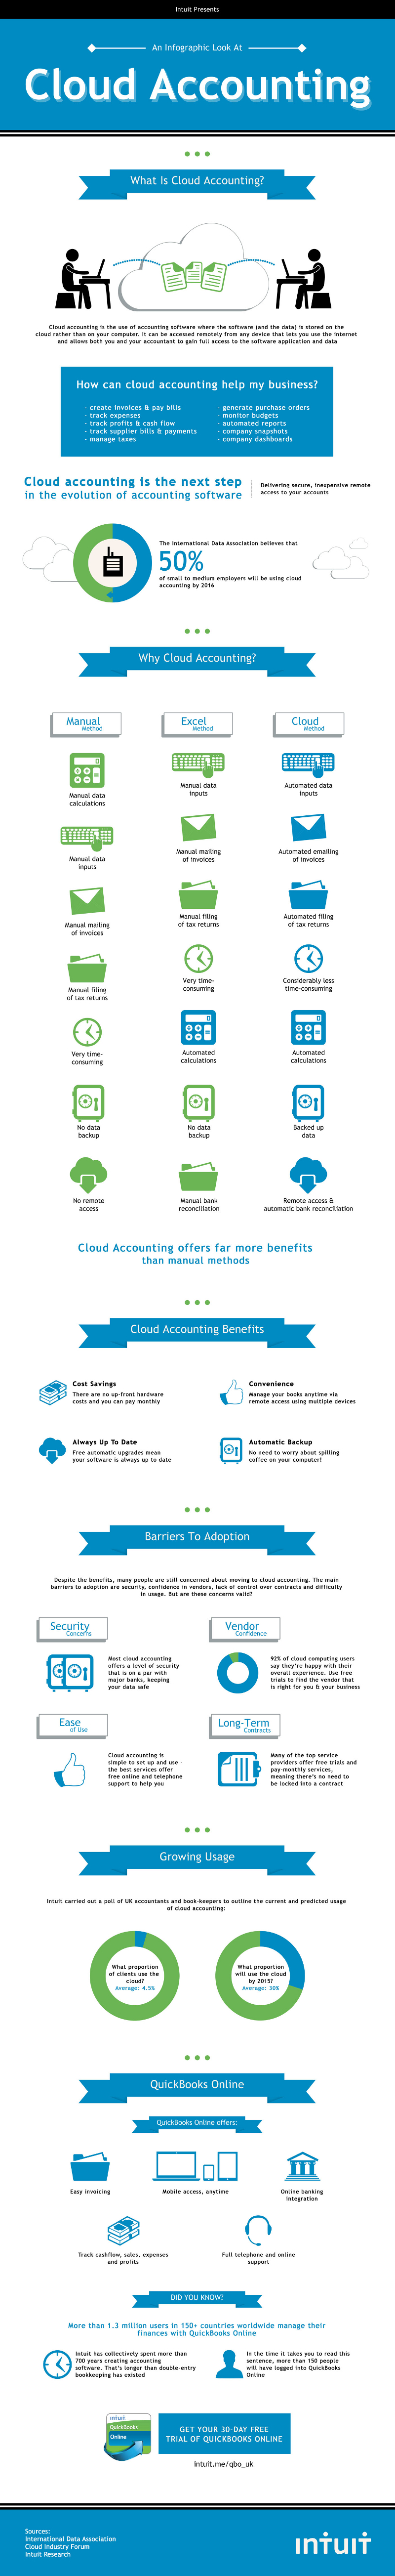 Cloud Accounting Benefits